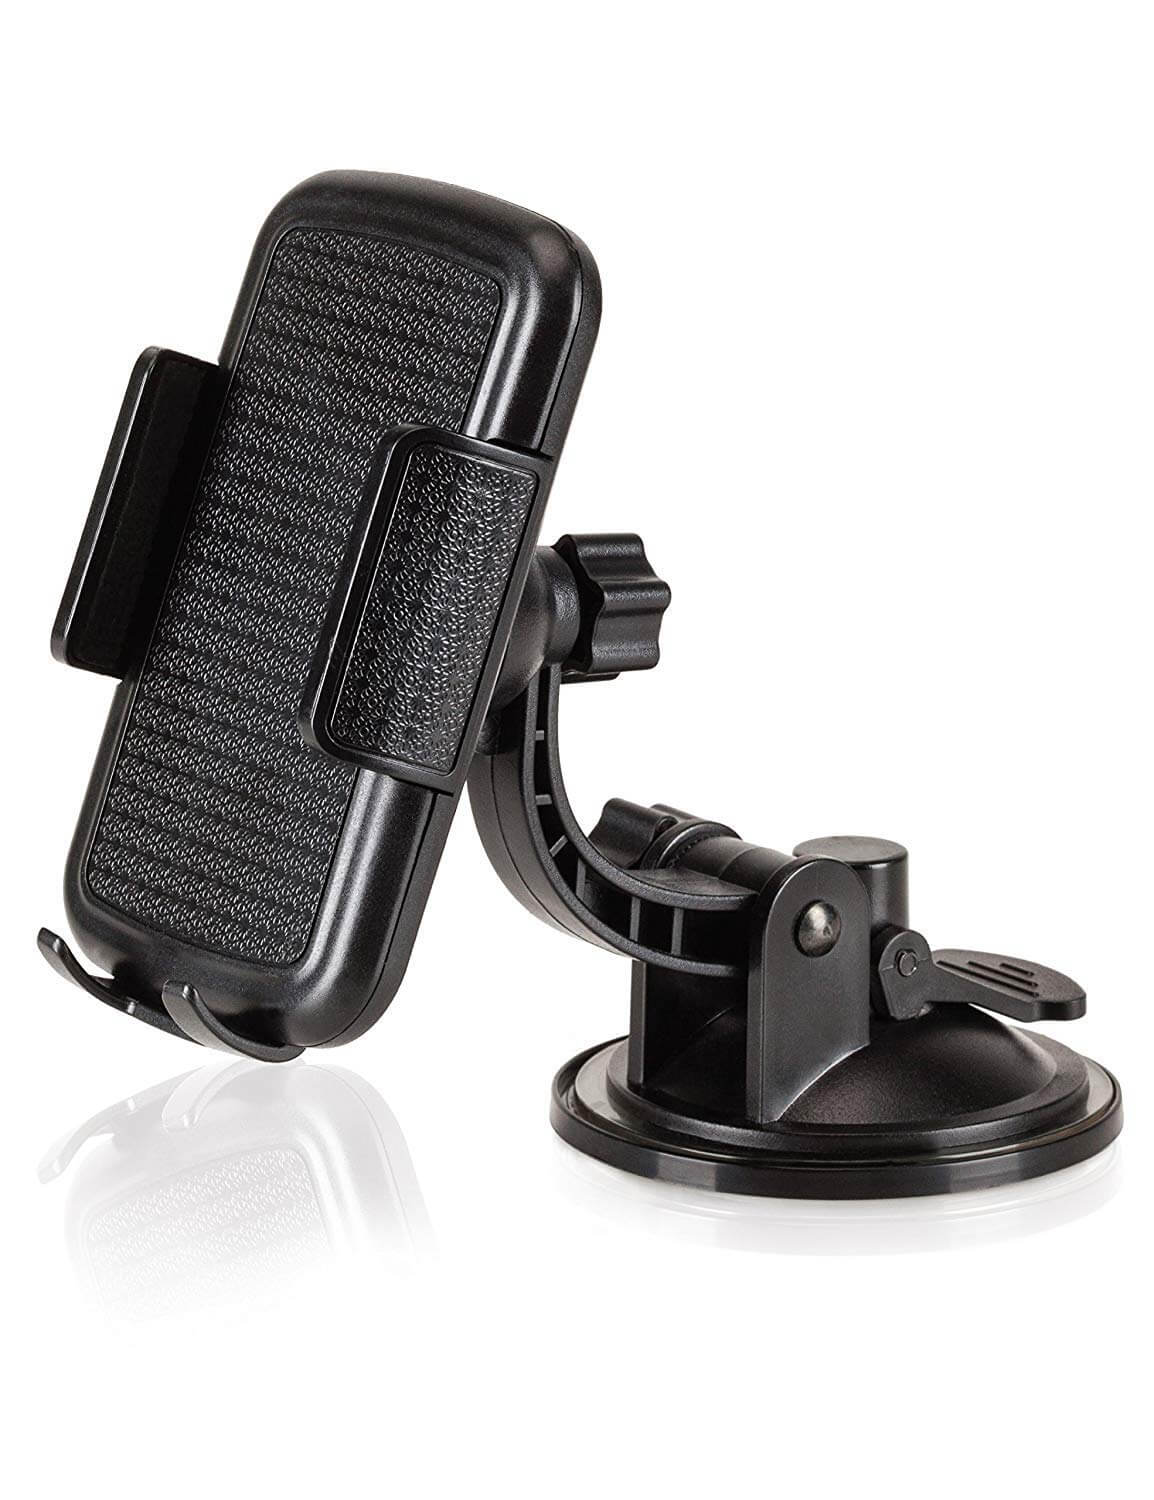 Buy Best Car Phone Holder 100% Universal Magnetic Dashboard Mount